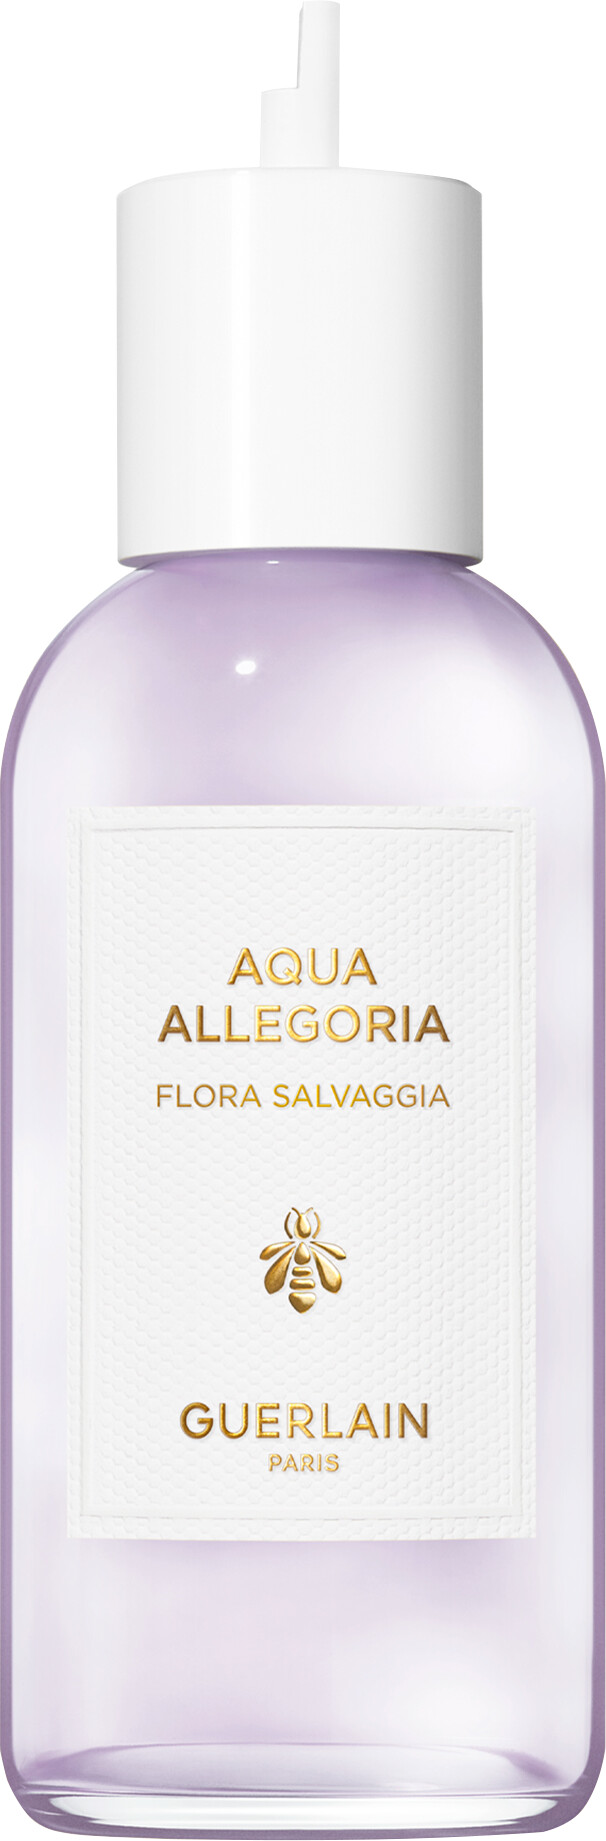 GUERLAIN Aqua Allegoria Flora Salvaggia Eau de Toilette Refill 200ml